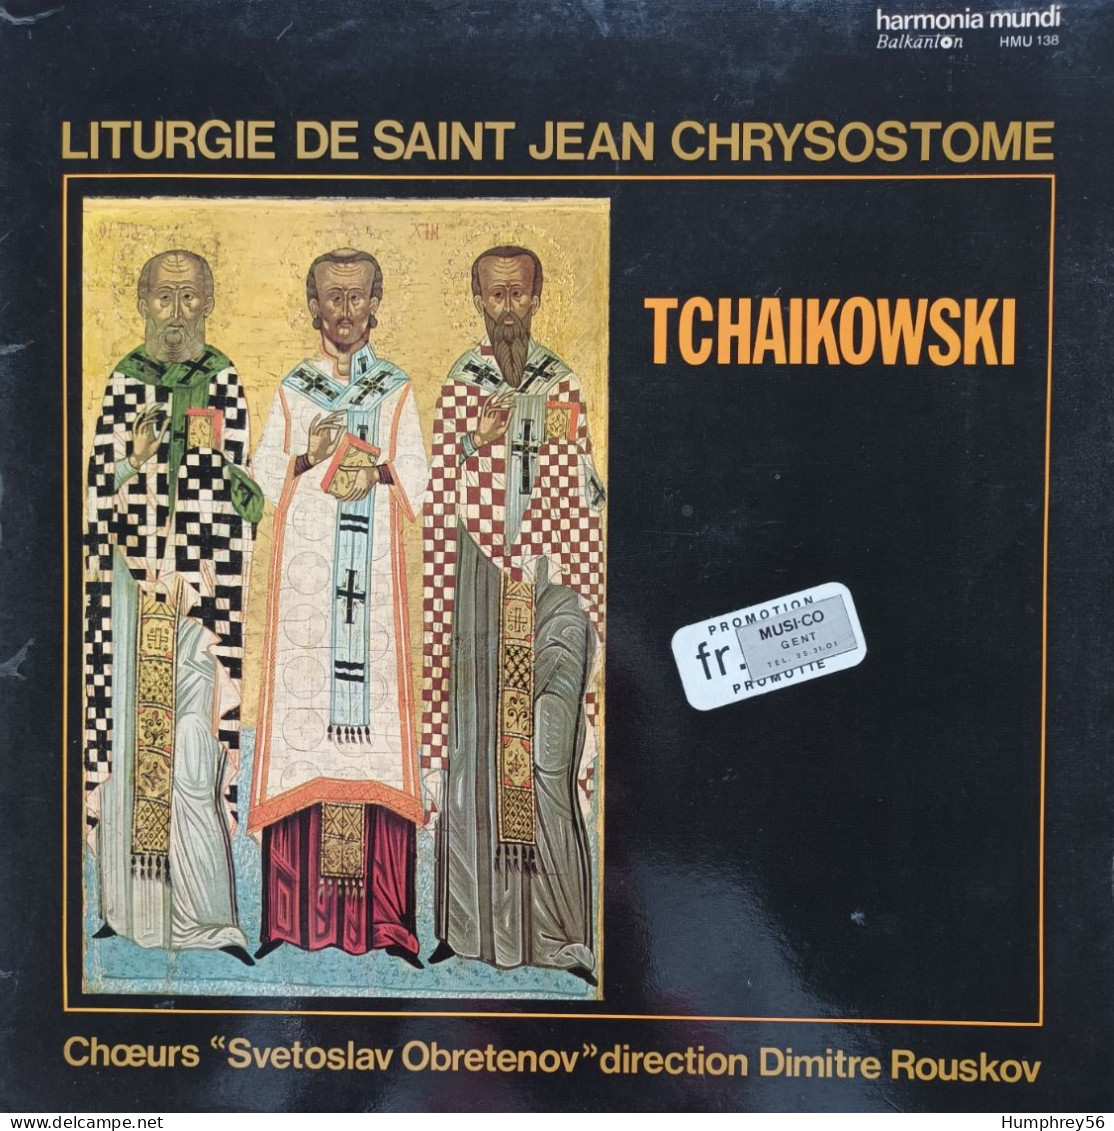 1974 - Dimitre ROUSKOV - Liturgie De Saint Jean Chrysostome [Pyotr Ilyich Tchaikovsky] - Gospel & Religiöser Gesang